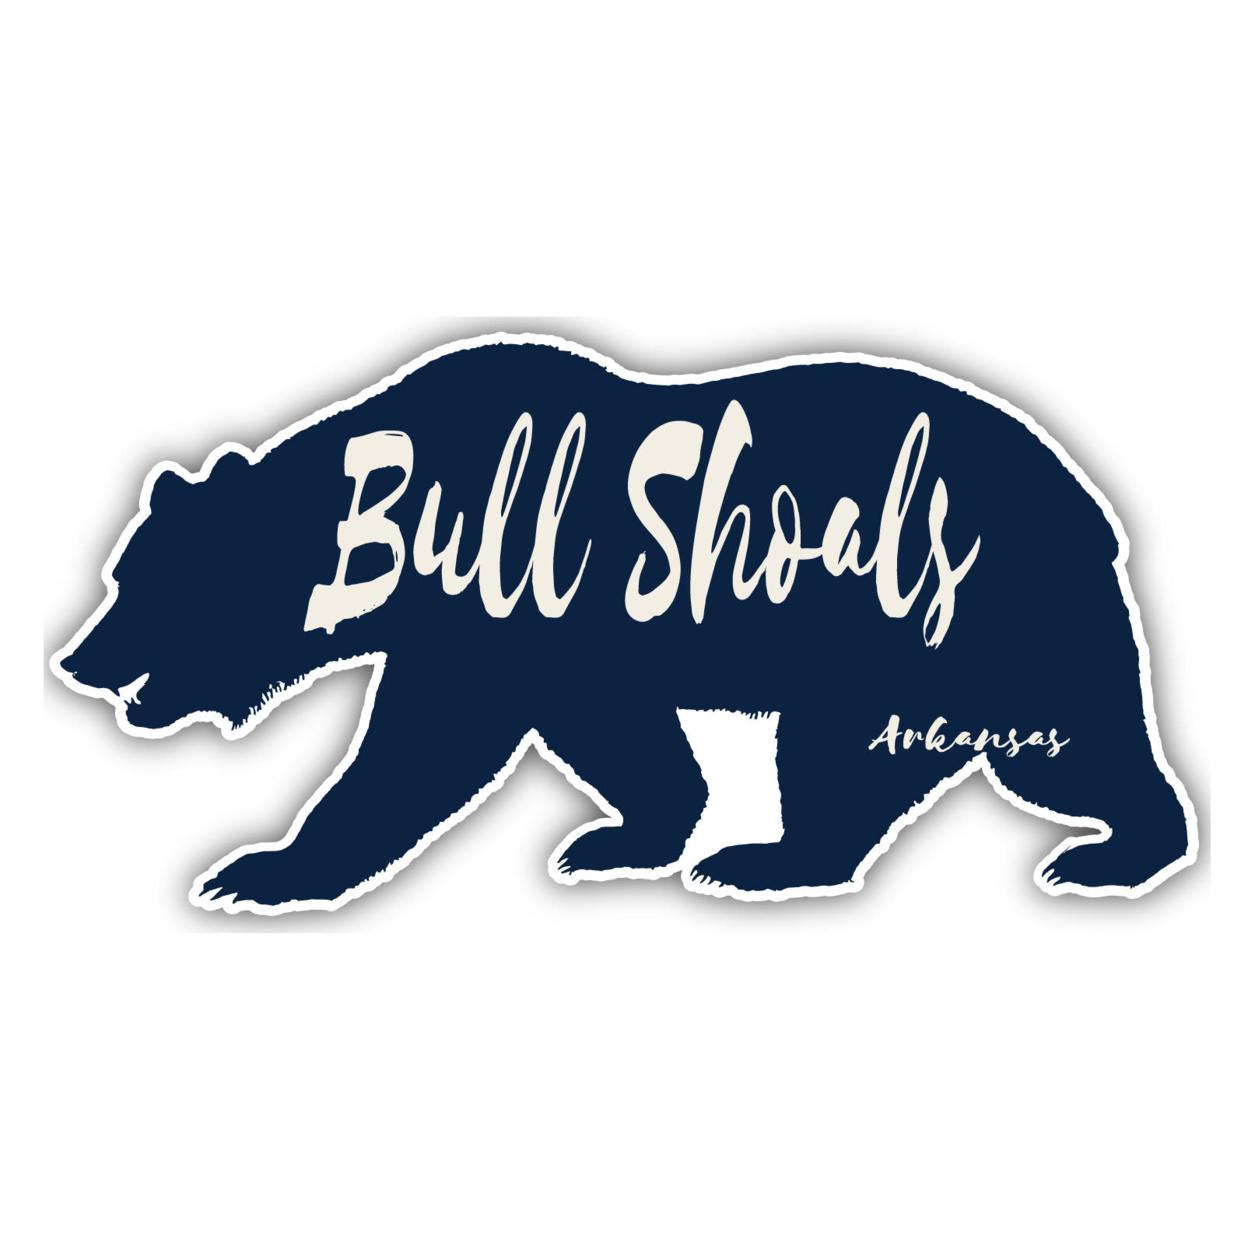 Bull Shoals Arkansas Souvenir Decorative Stickers (Choose Theme And Size) - Single Unit, 2-Inch, Adventures Awaits